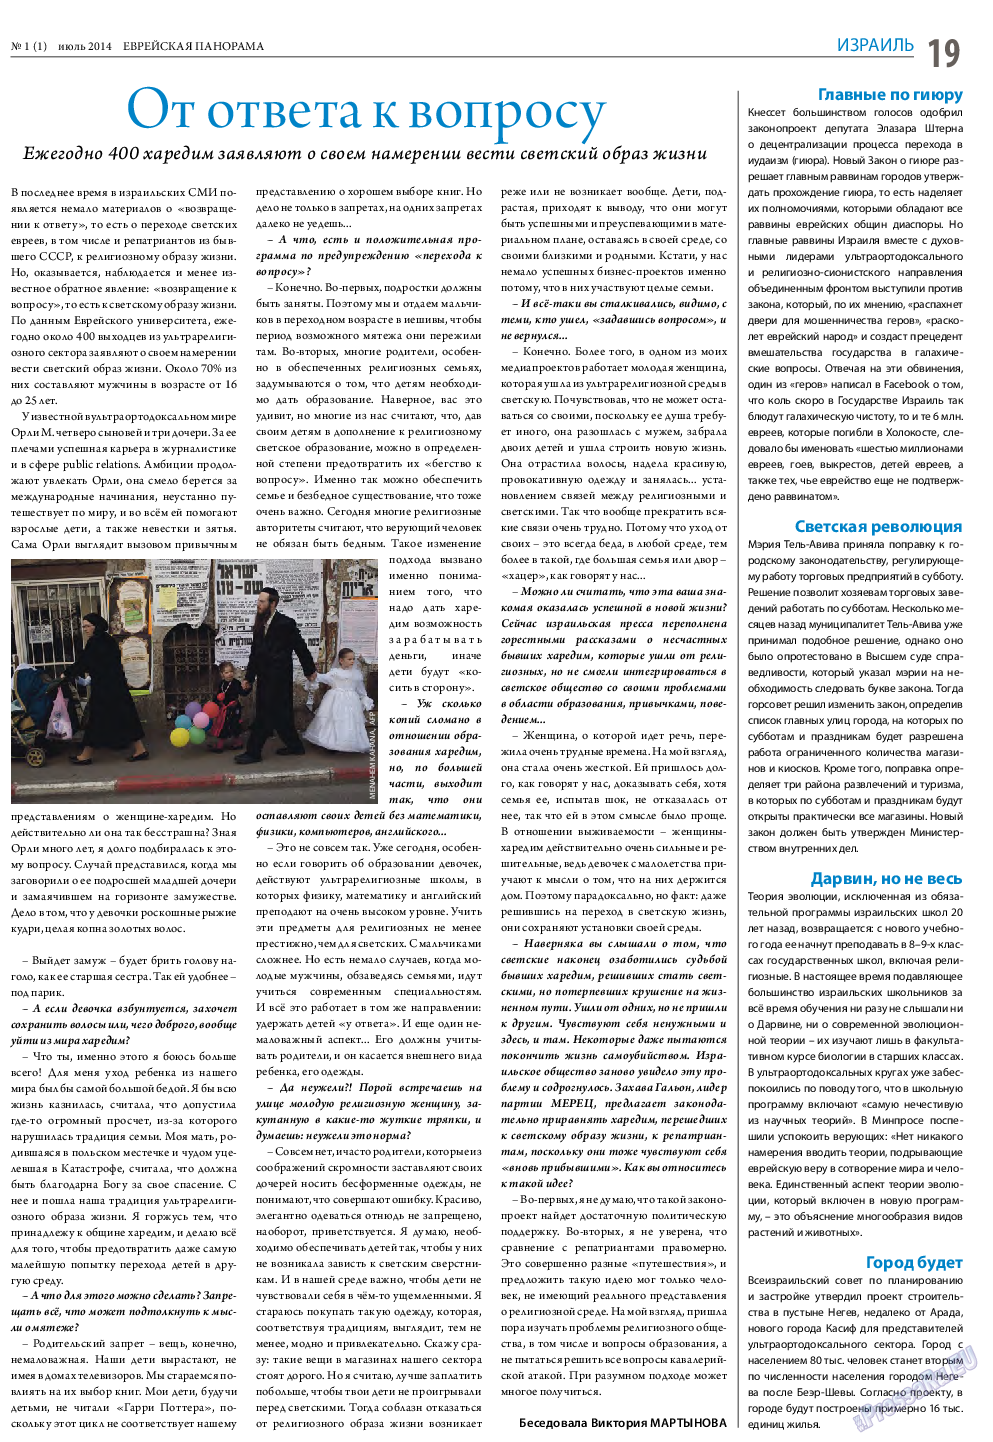 Еврейская панорама, газета. 2014 №1 стр.19